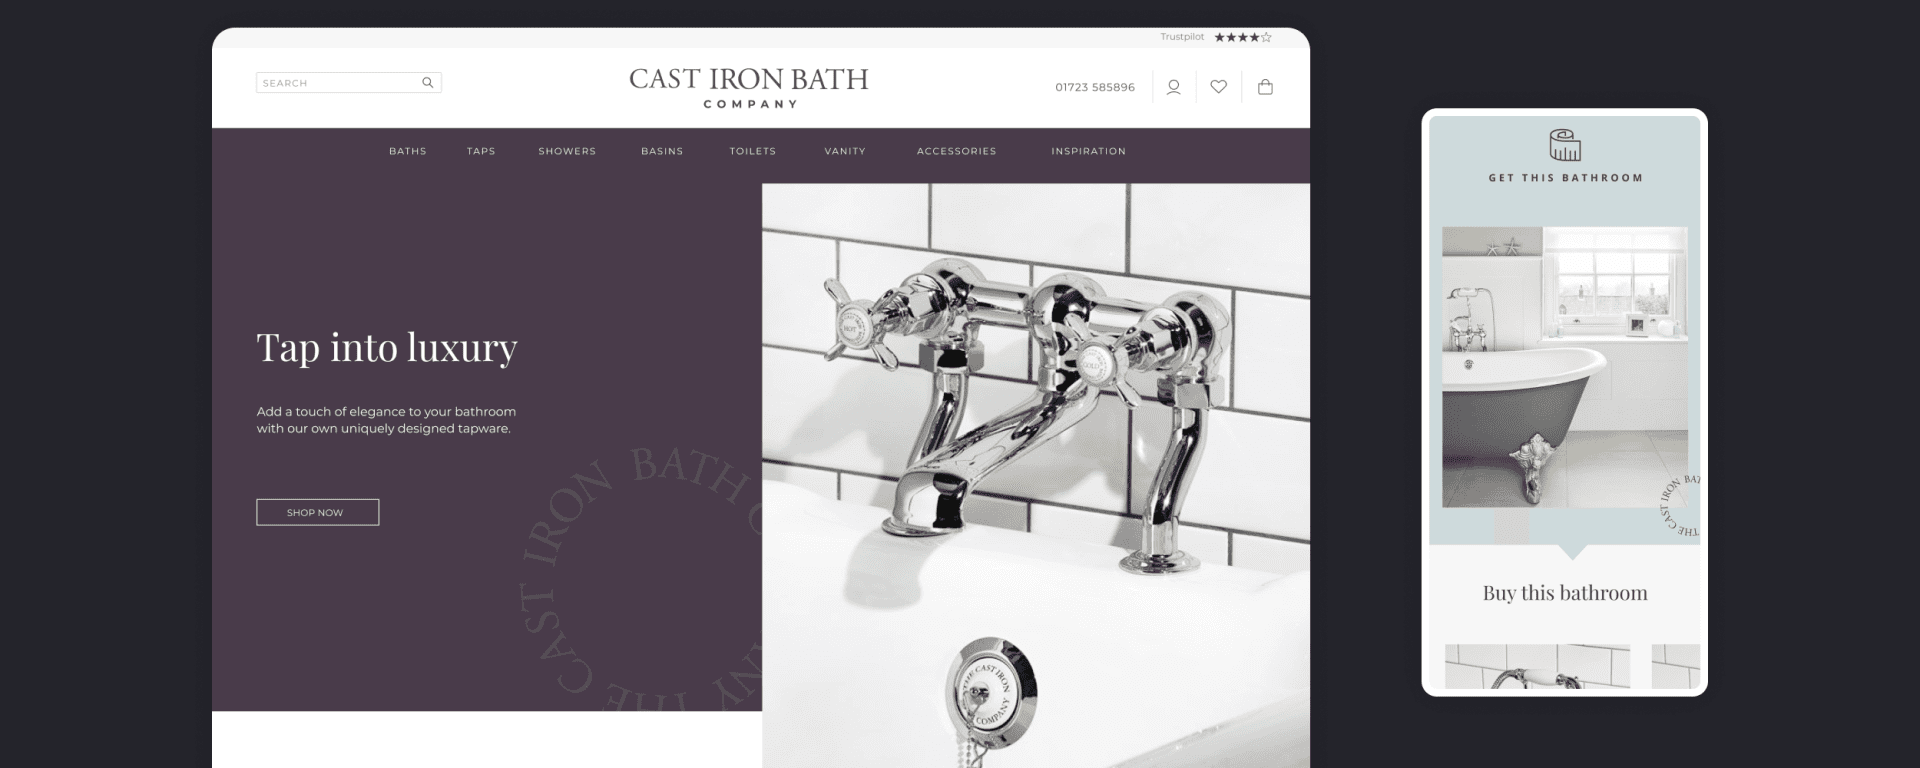 Cast Iron Baths Website Homepage